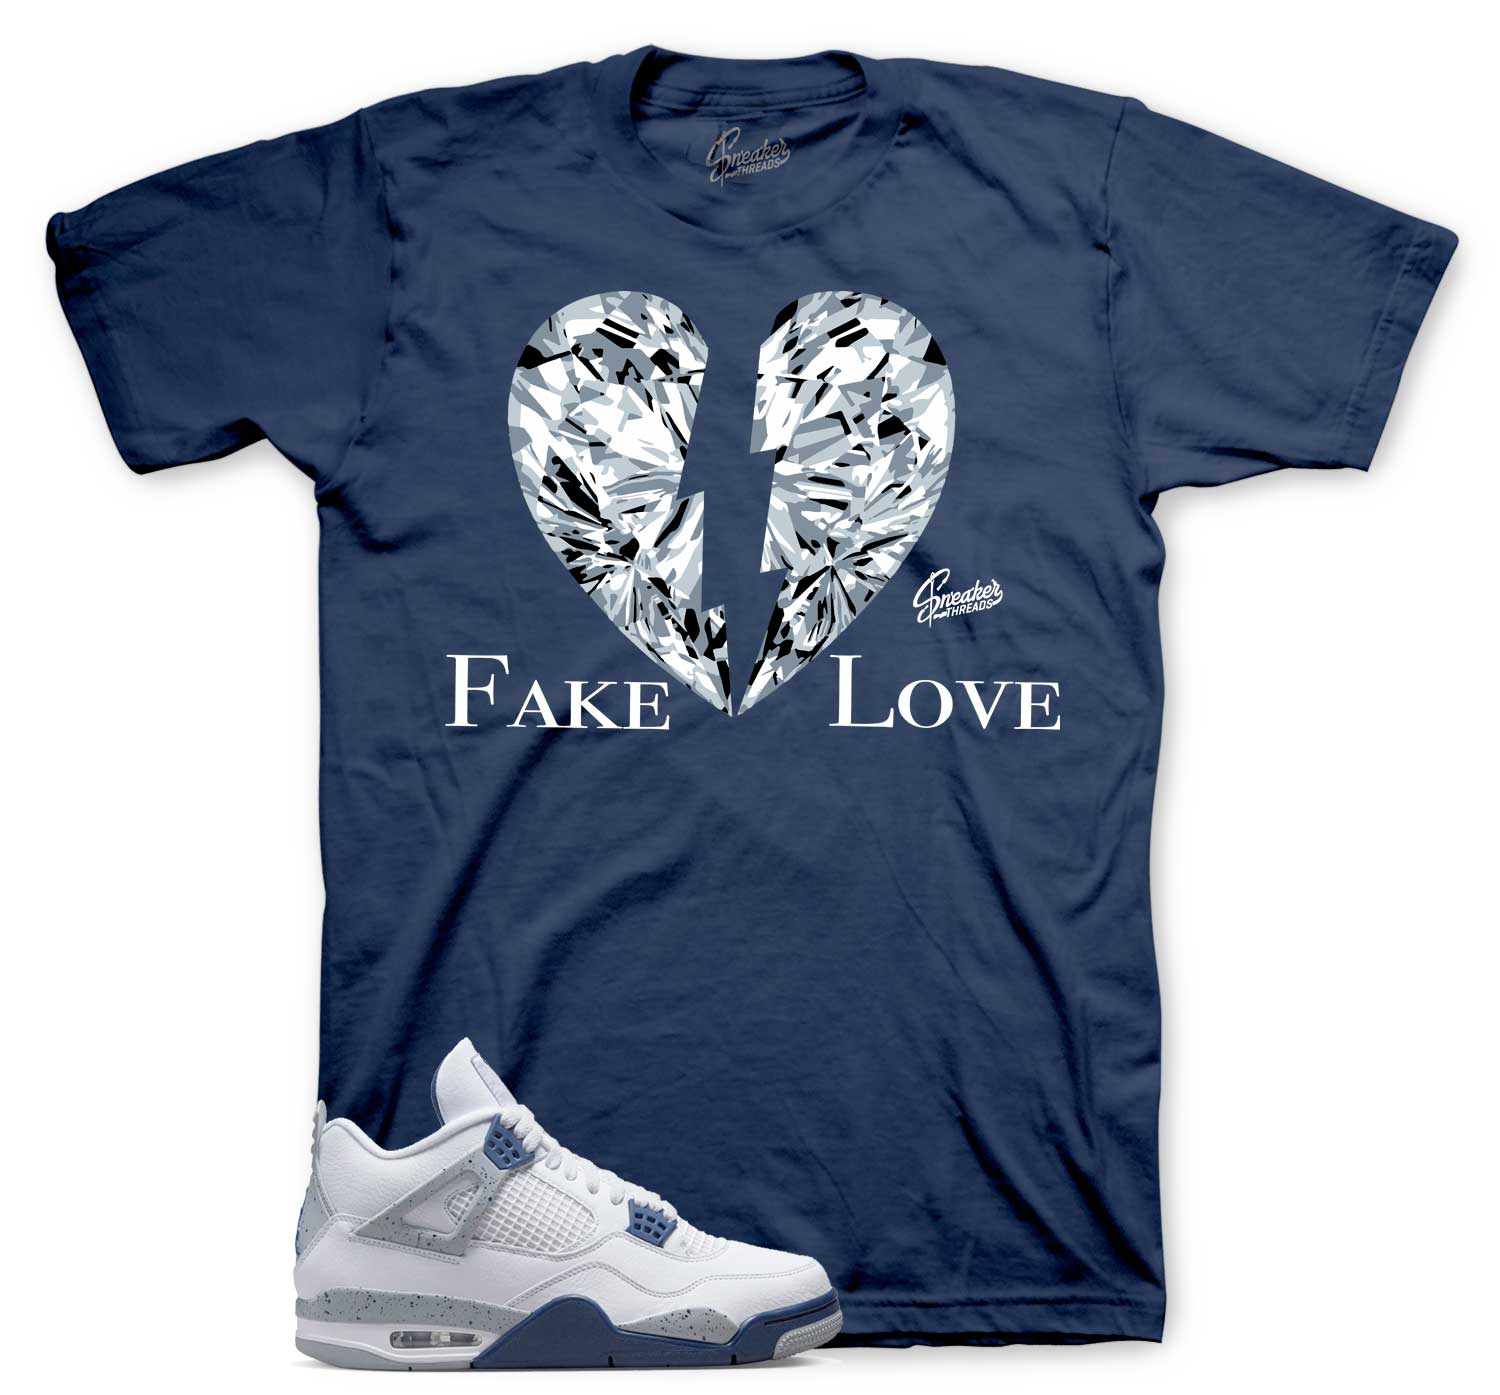 Retro 4 Midngiht Navy Shirt - Fake love - Navy